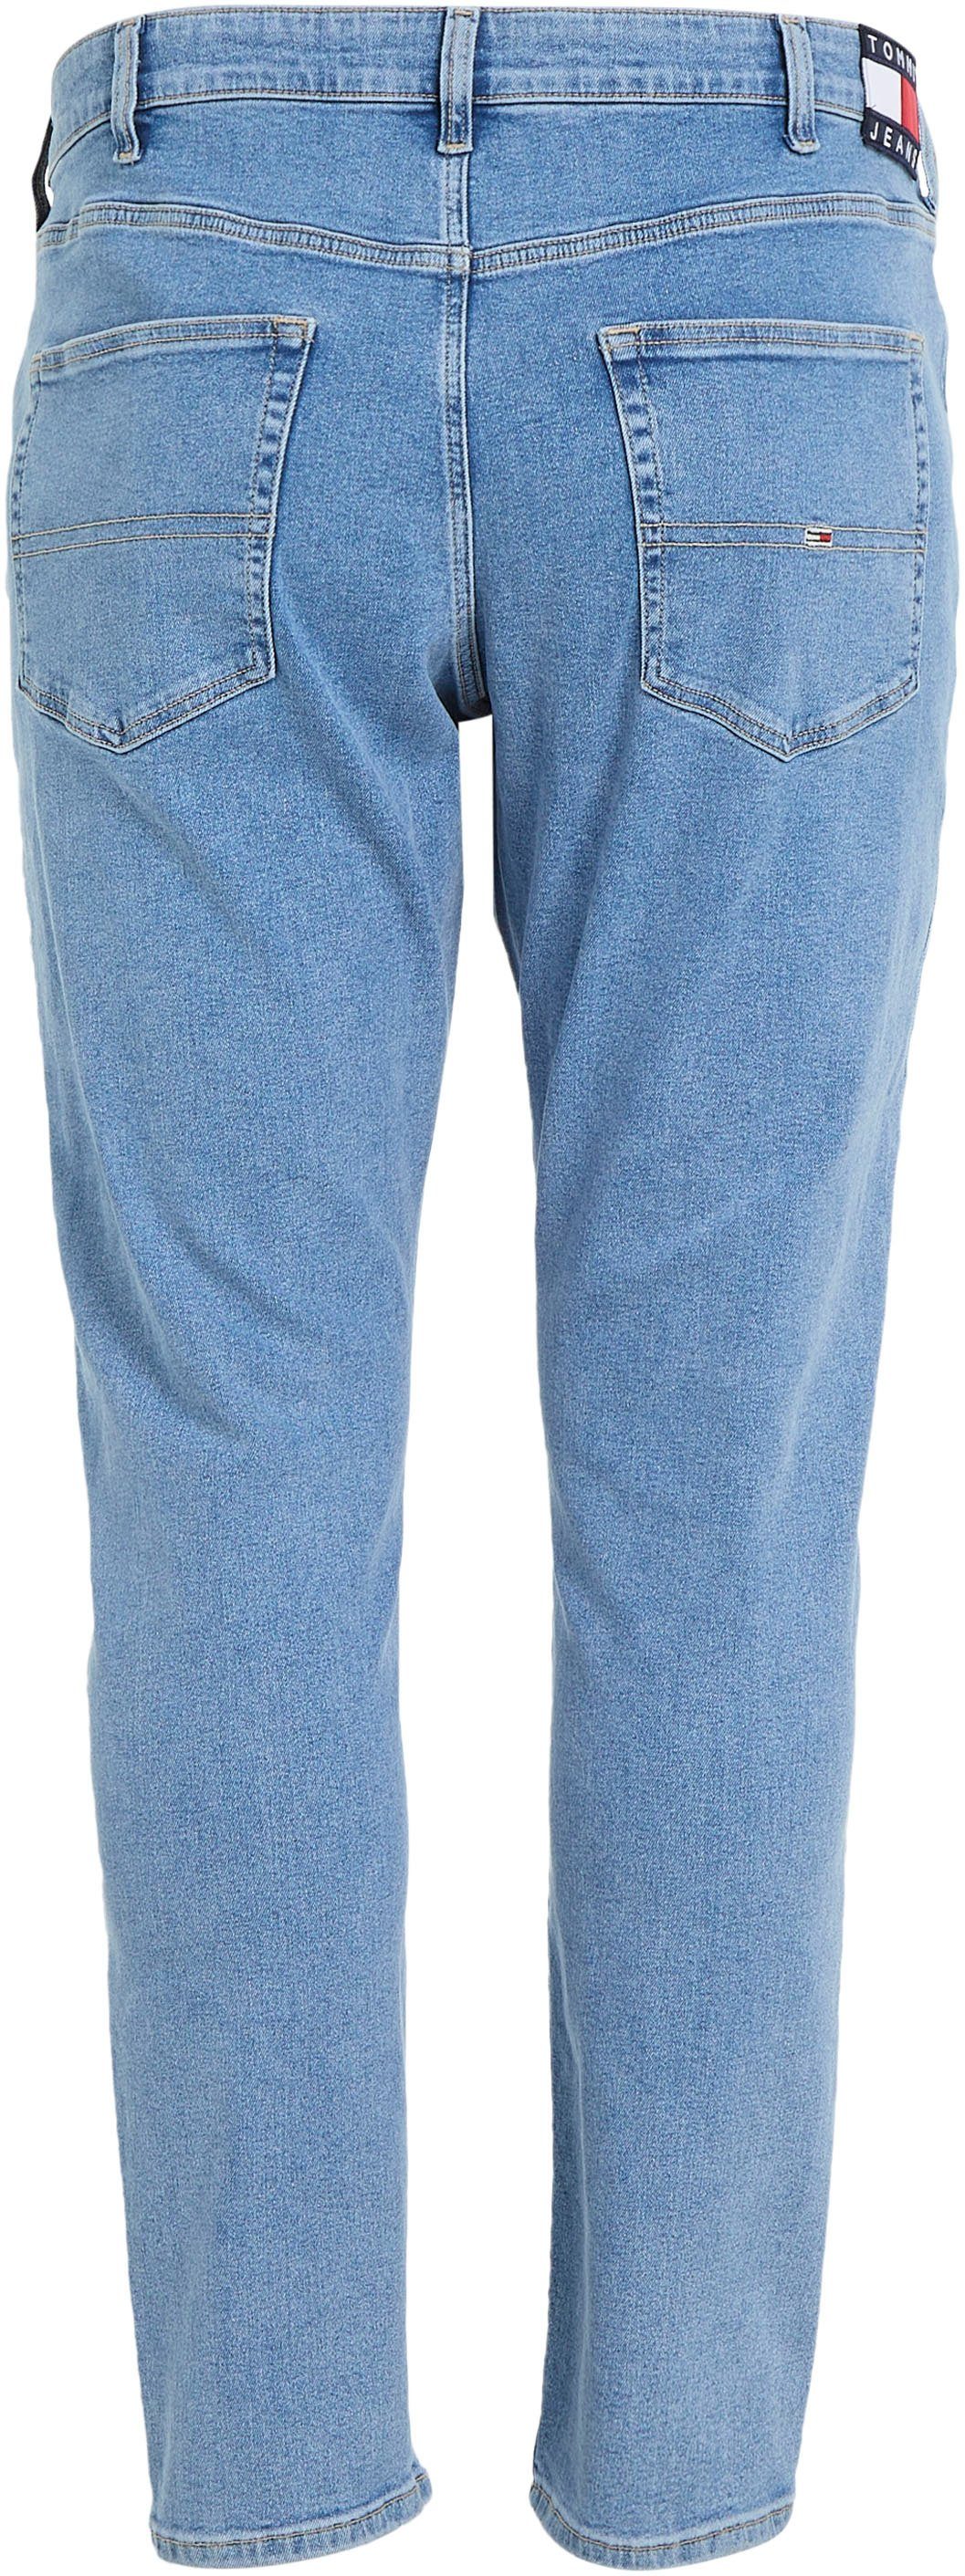 SLIM PLUS CG4239 Plus Jeans Stretch-Jeans SCANTON Tommy